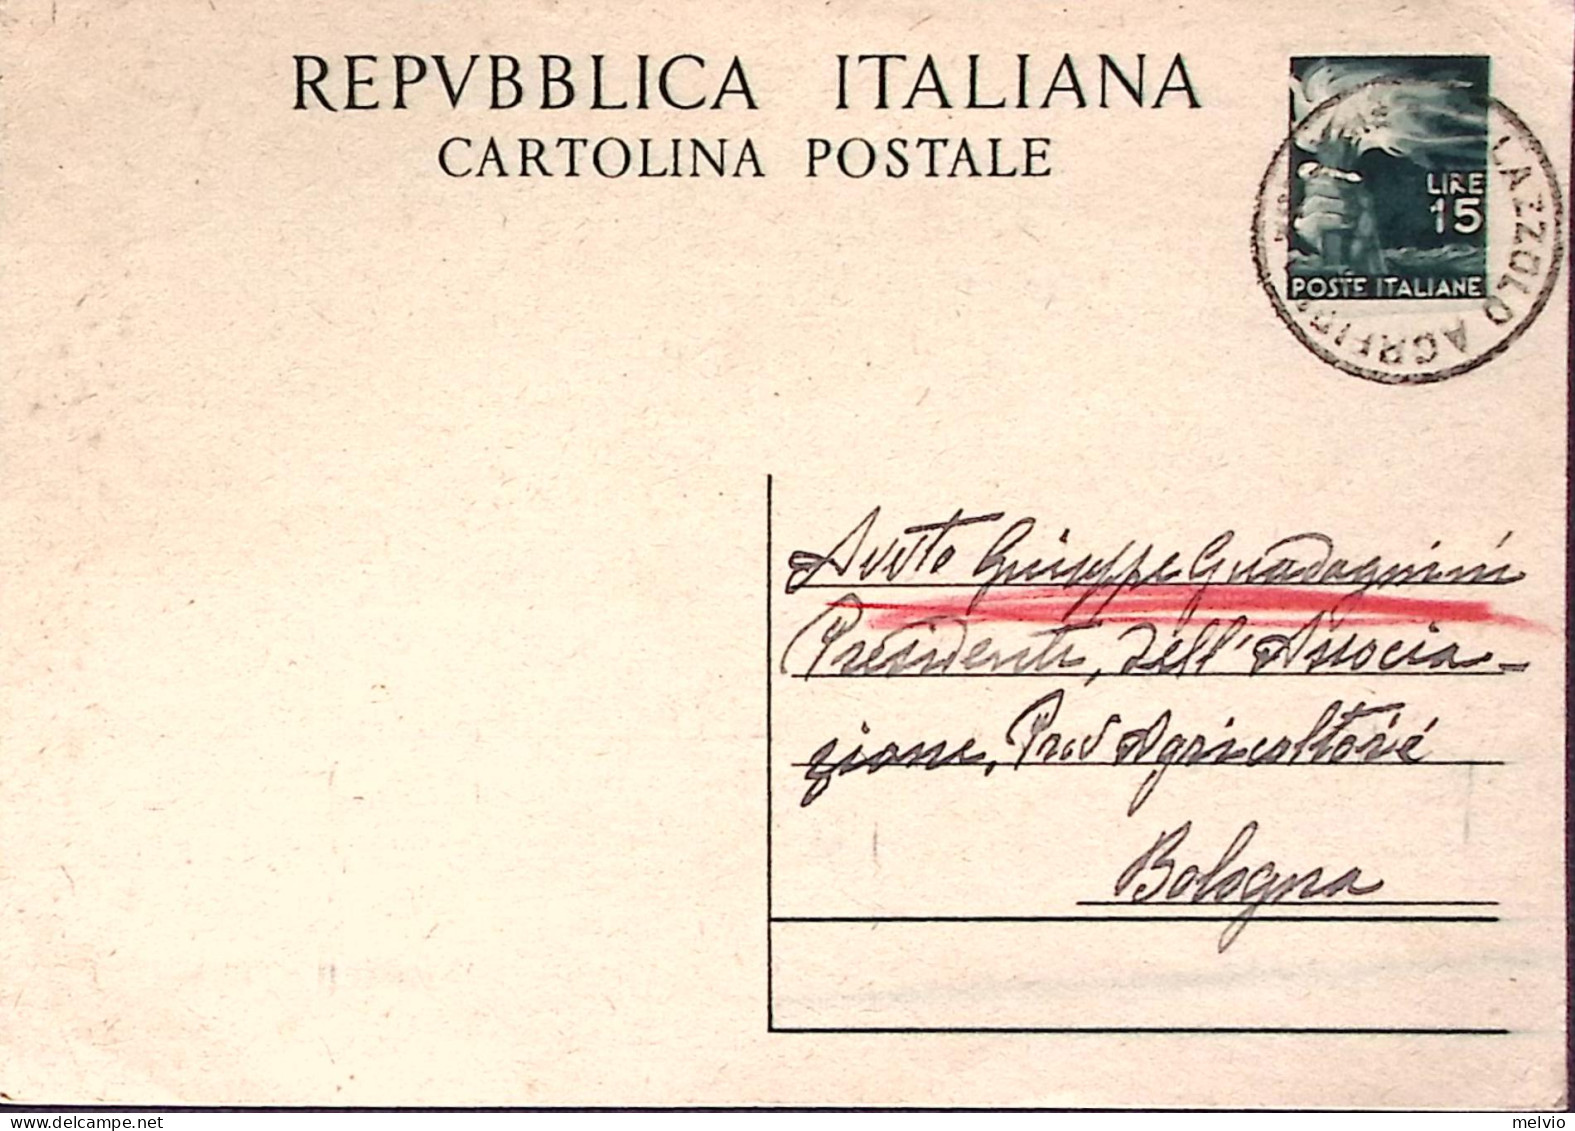 1950-Cartolina Postale Democratica Lire 15 Viaggiata - 1946-60: Storia Postale